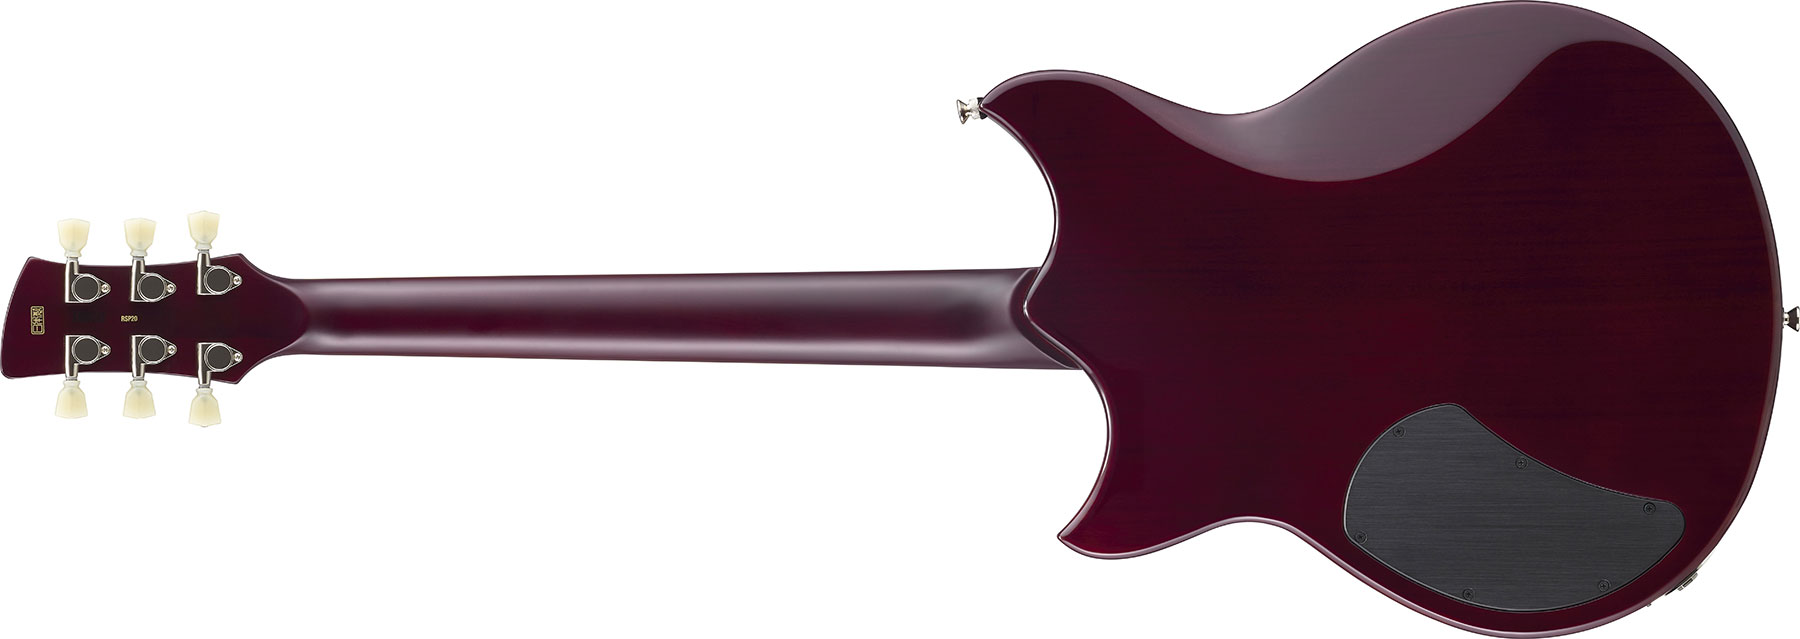 Yamaha Rss02t Revstar Standard 2p90 Ht Rw - Black - Double Cut E-Gitarre - Variation 2